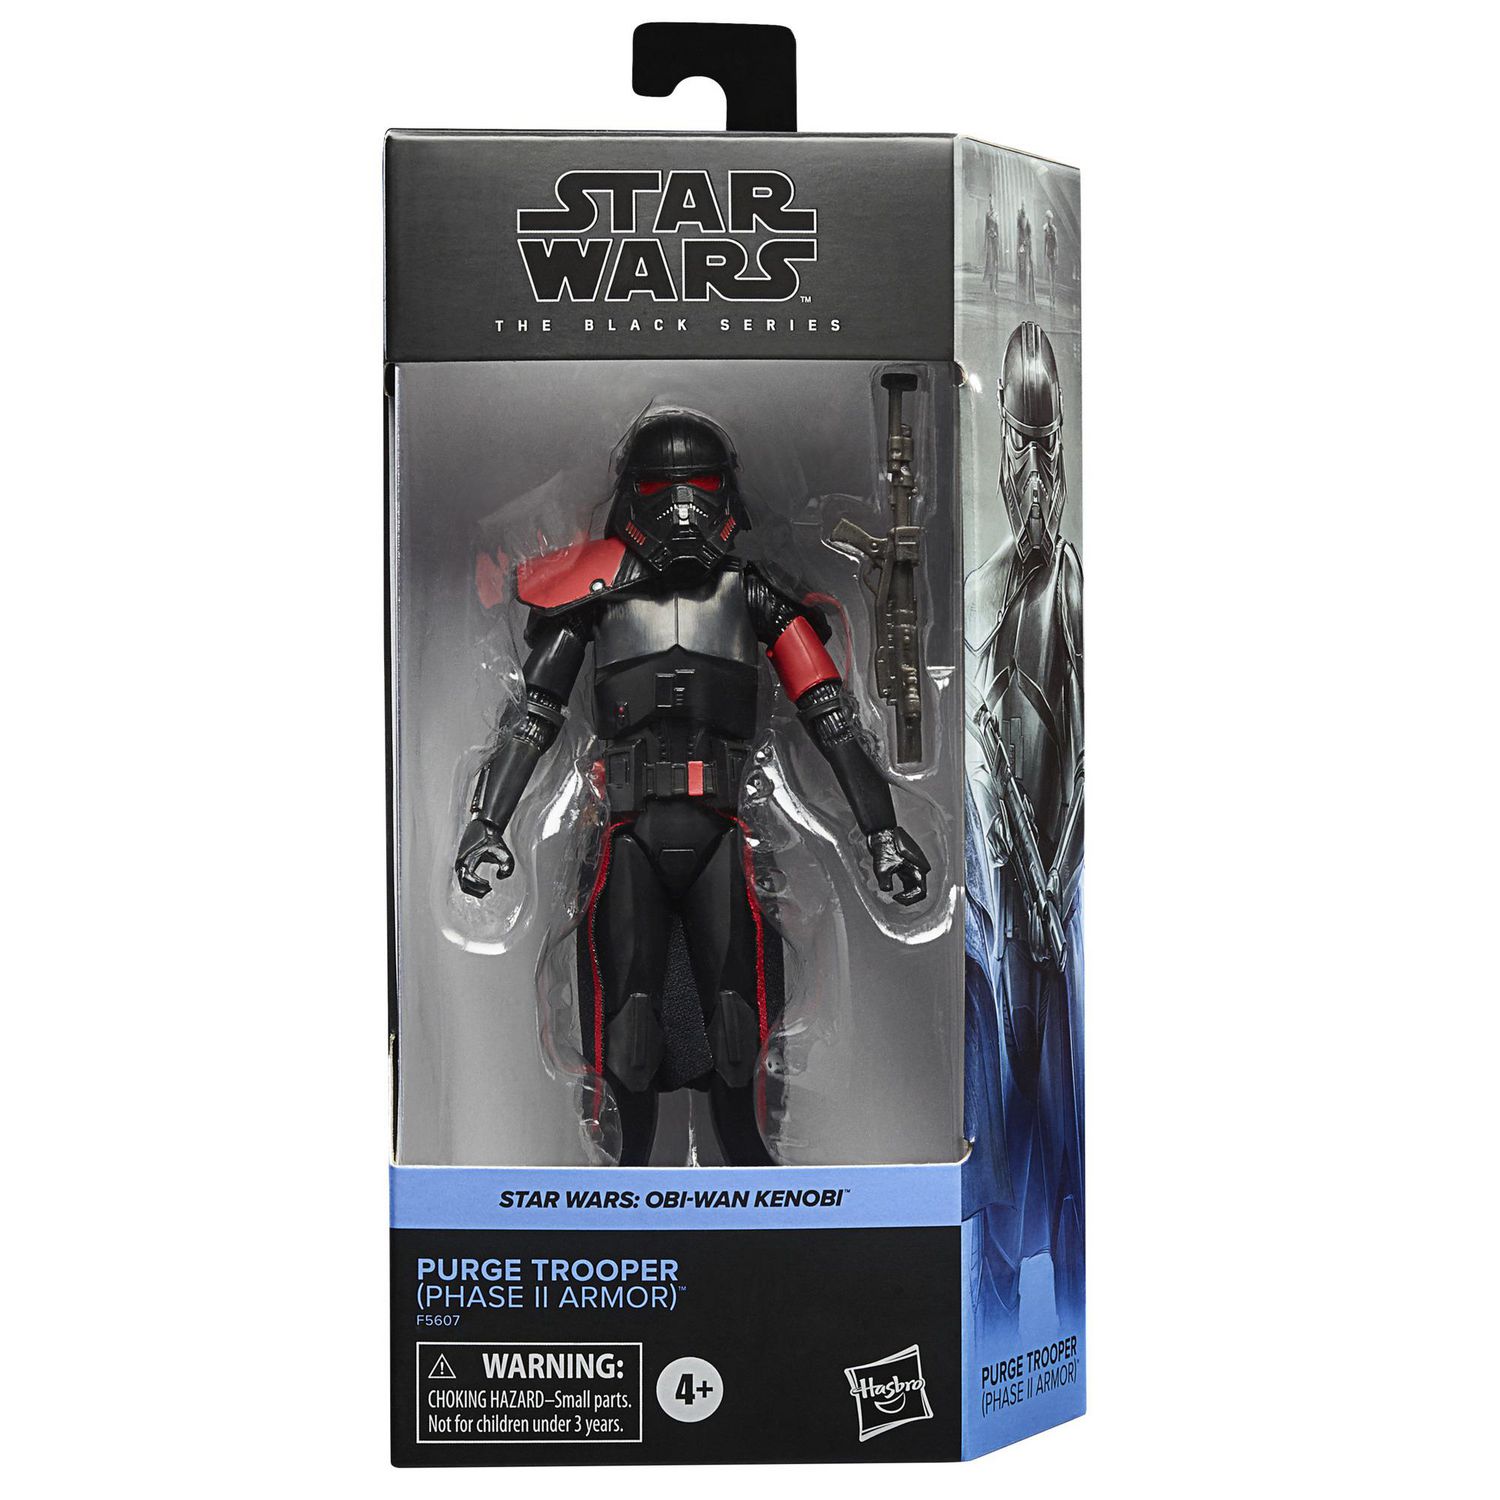 Star Wars The Black Series Purge Trooper (Phase II Armor) Toy 6 